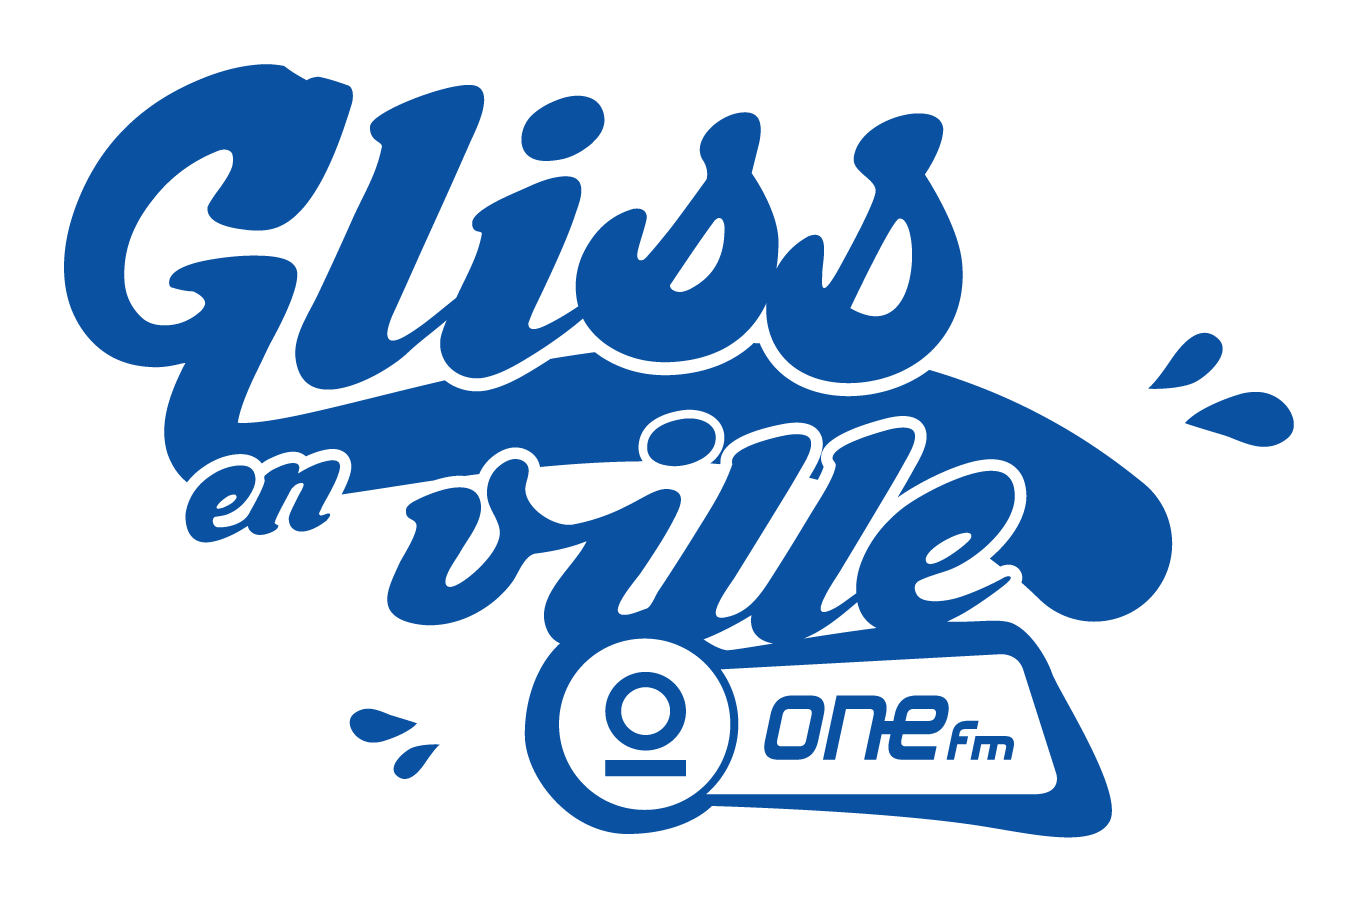 Gliss'en Ville One FM 2018